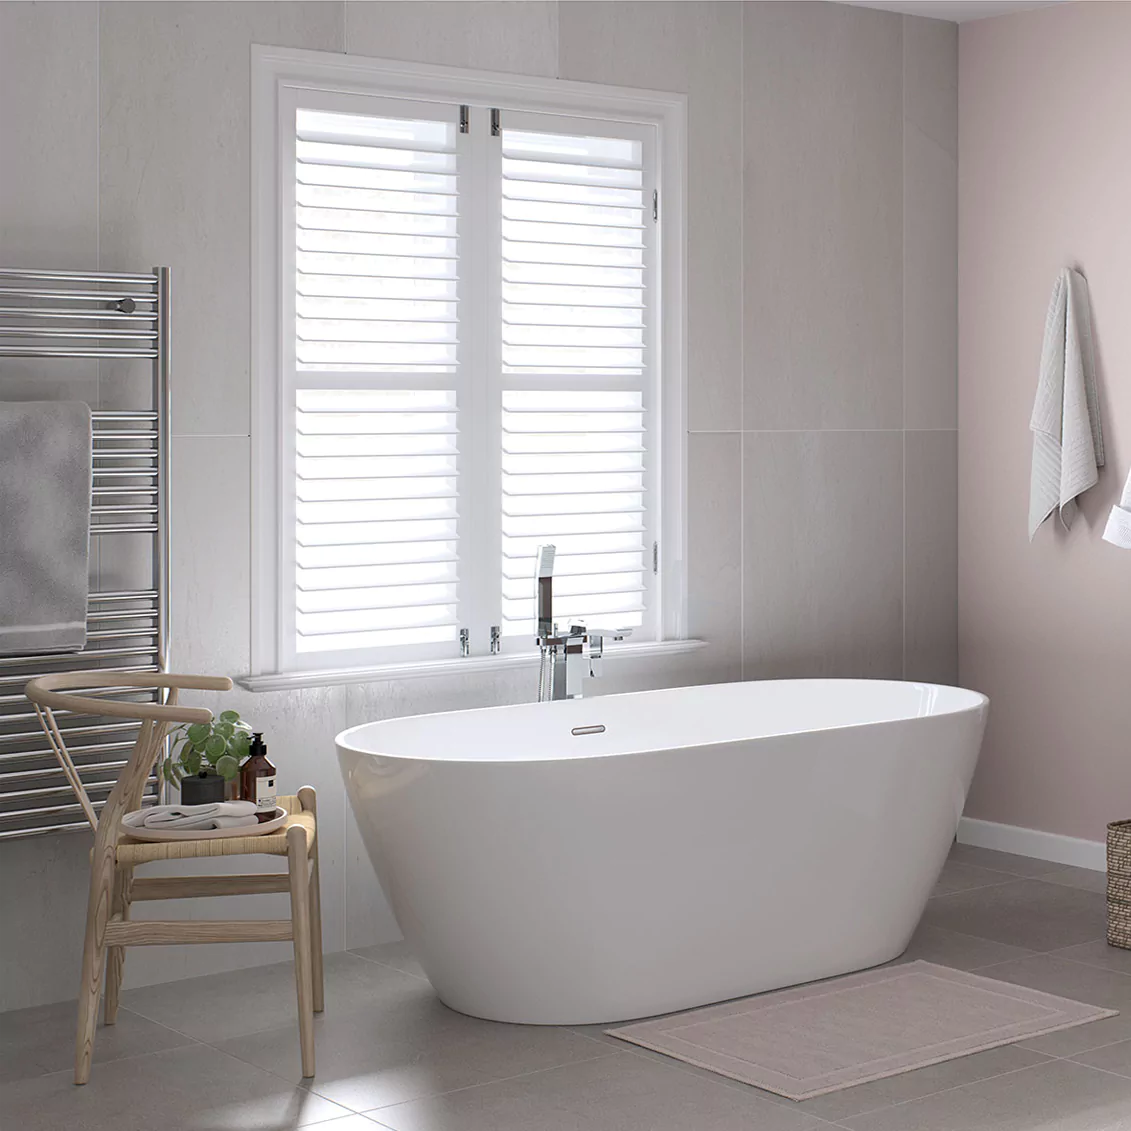 Tissino Angelo Freestanding Bath, White 1700x800mm in a modern bathroom space